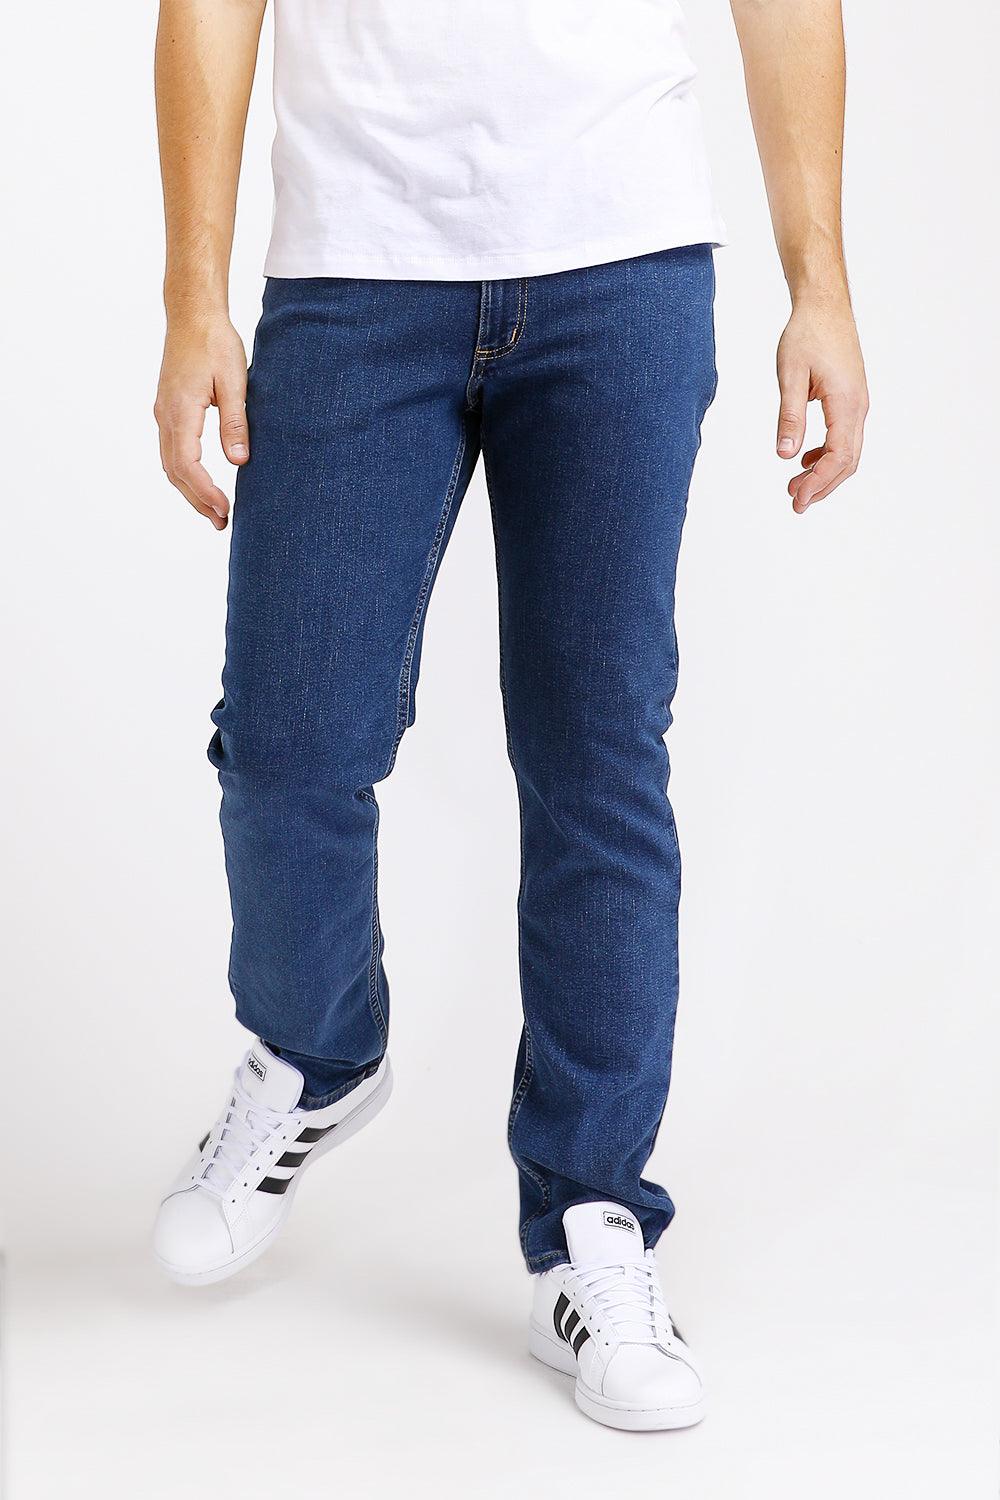 LEE - ג'ינס BROOKLYN STRAIGHT כחול - MASHBIR//365